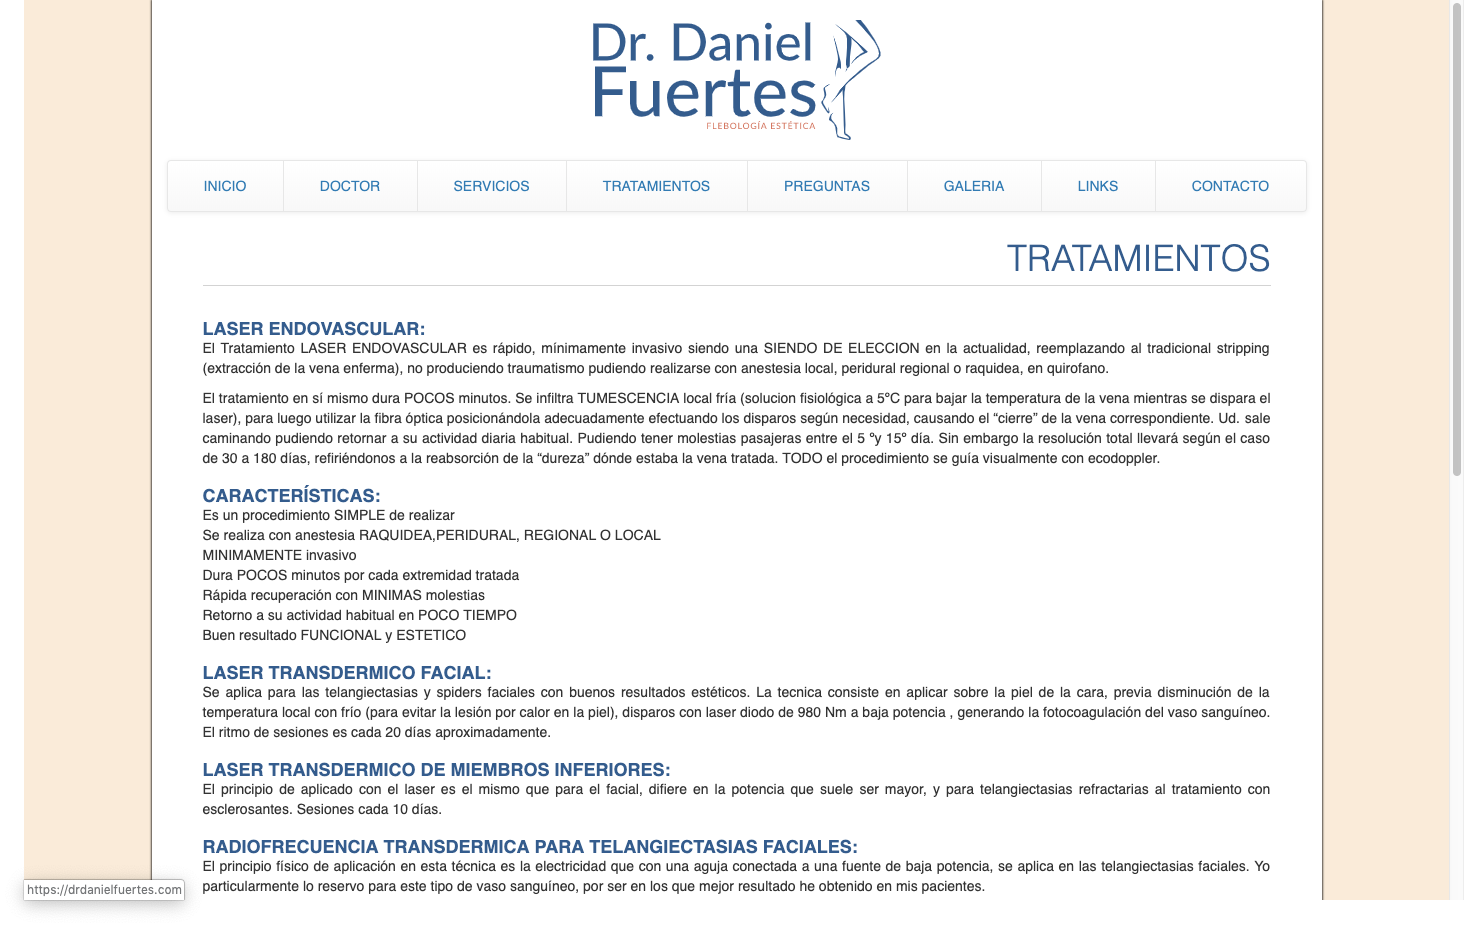 Dr Daniel Fuertes